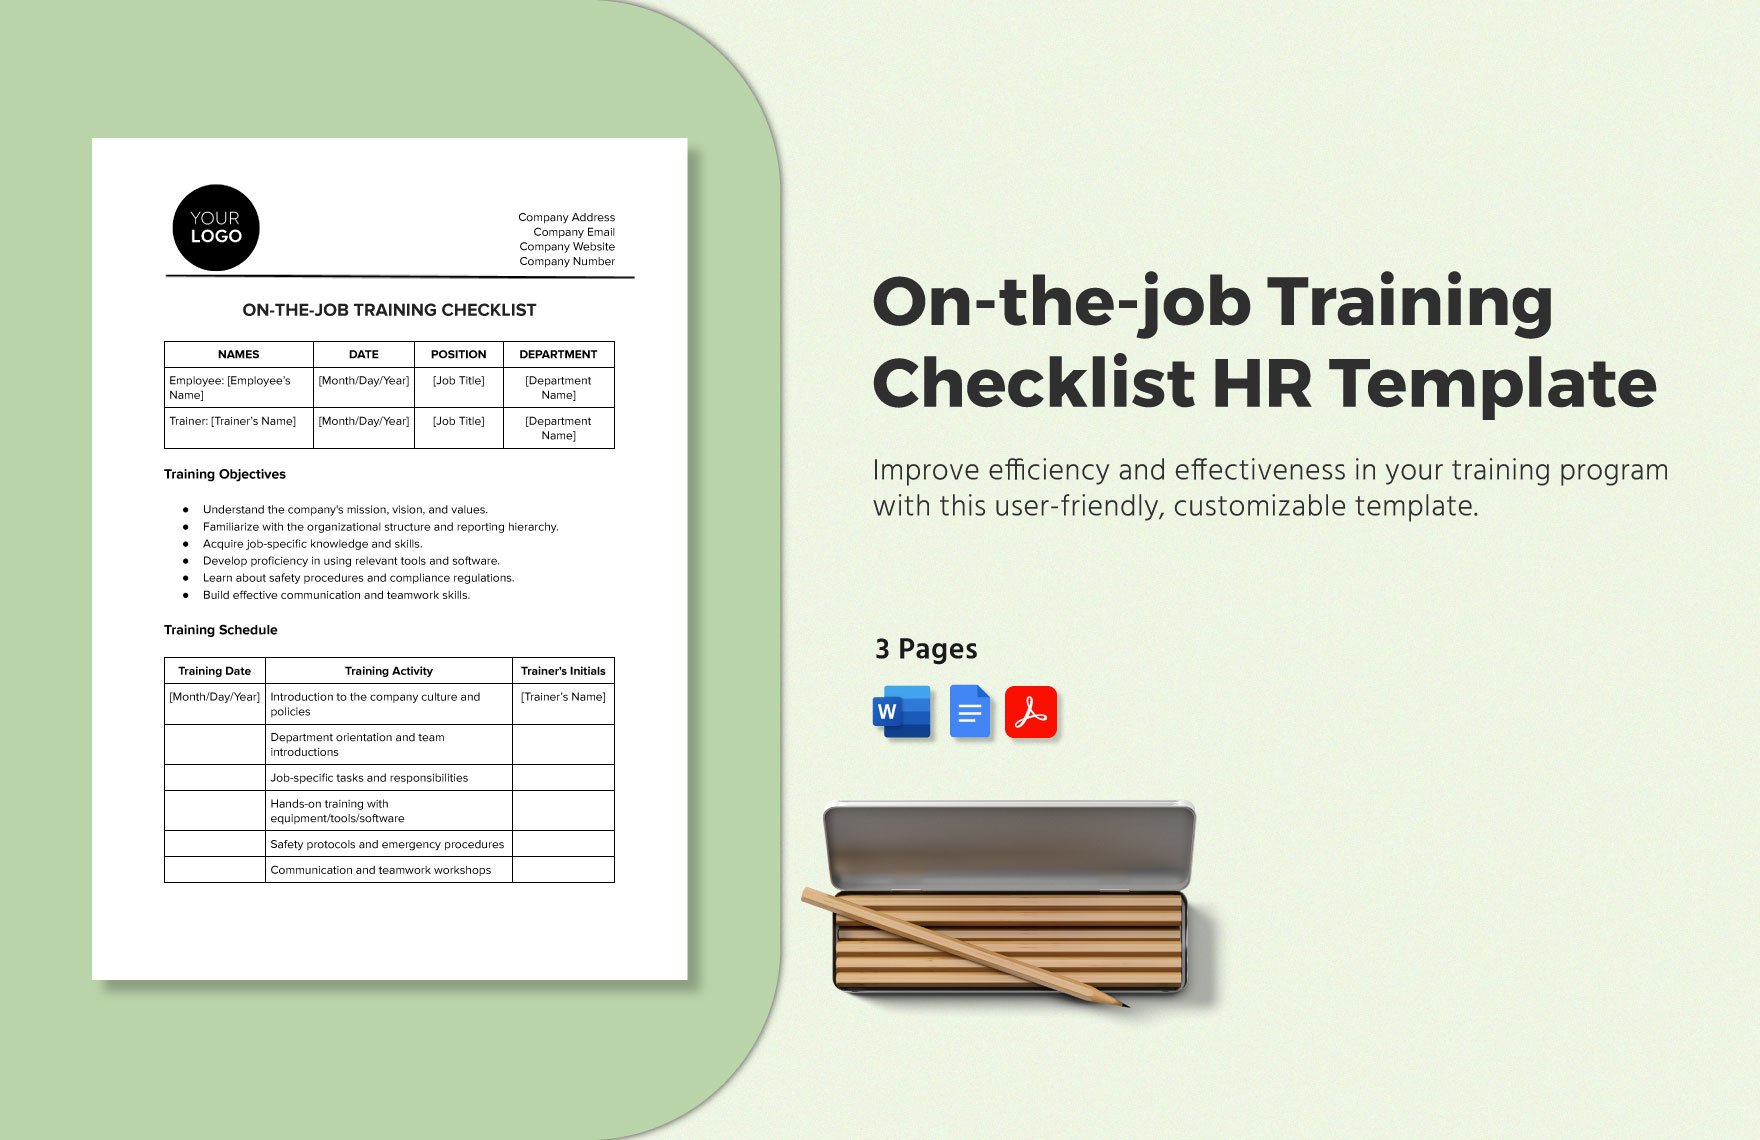 On-the-job Training Checklist HR Template